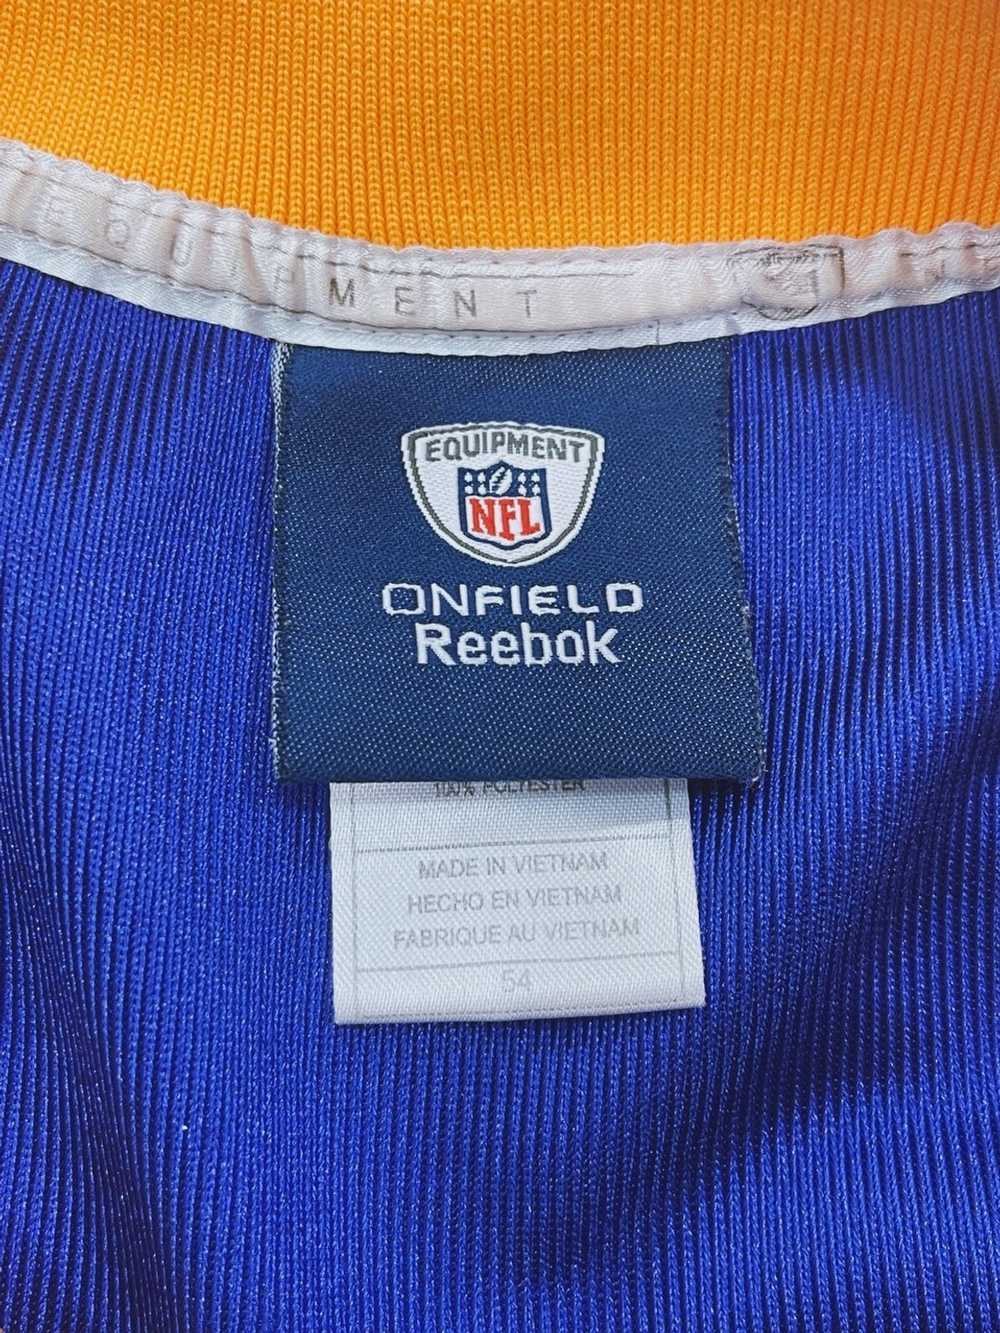 NFL × Reebok Adrian Peterson Vikings Jersey (Reeb… - image 7